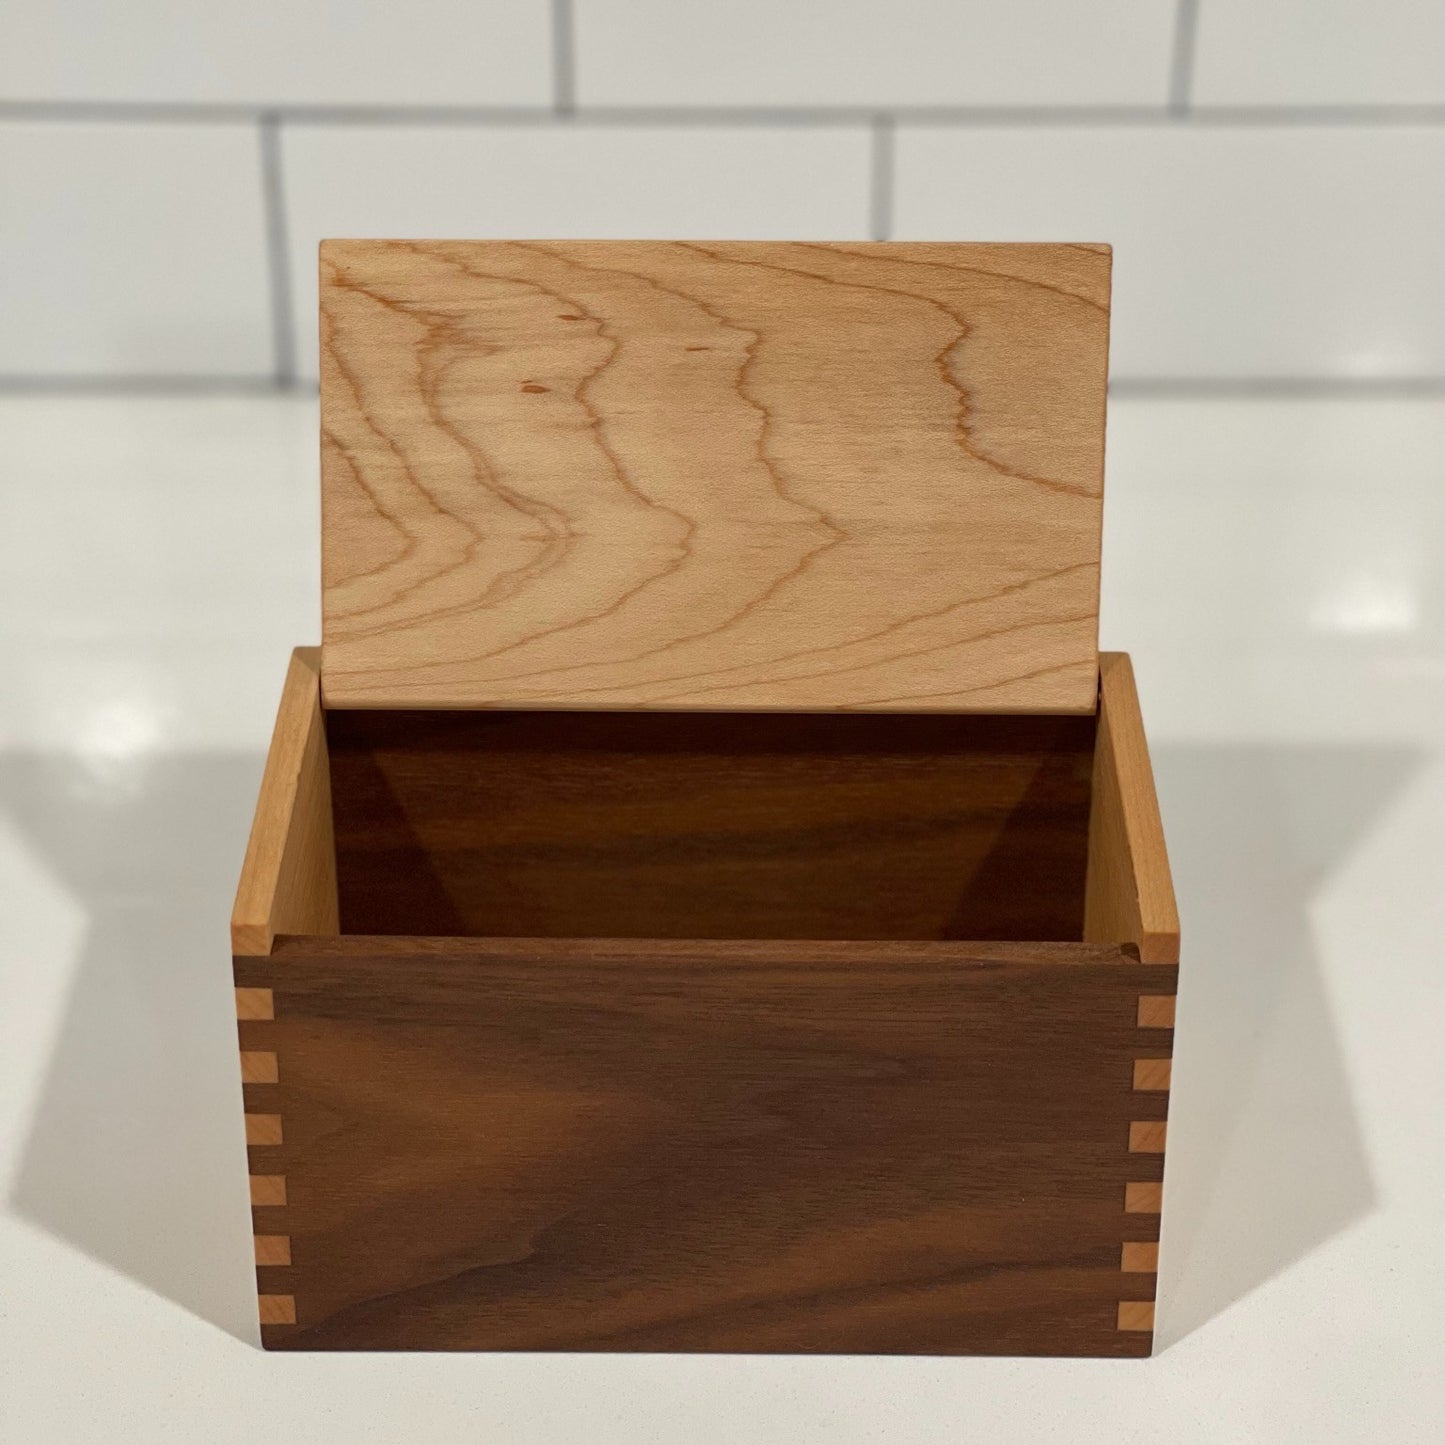 Wood Salt Cellar - Salt Box - Salt Pig - Keepsake Box - Maple and Walnut